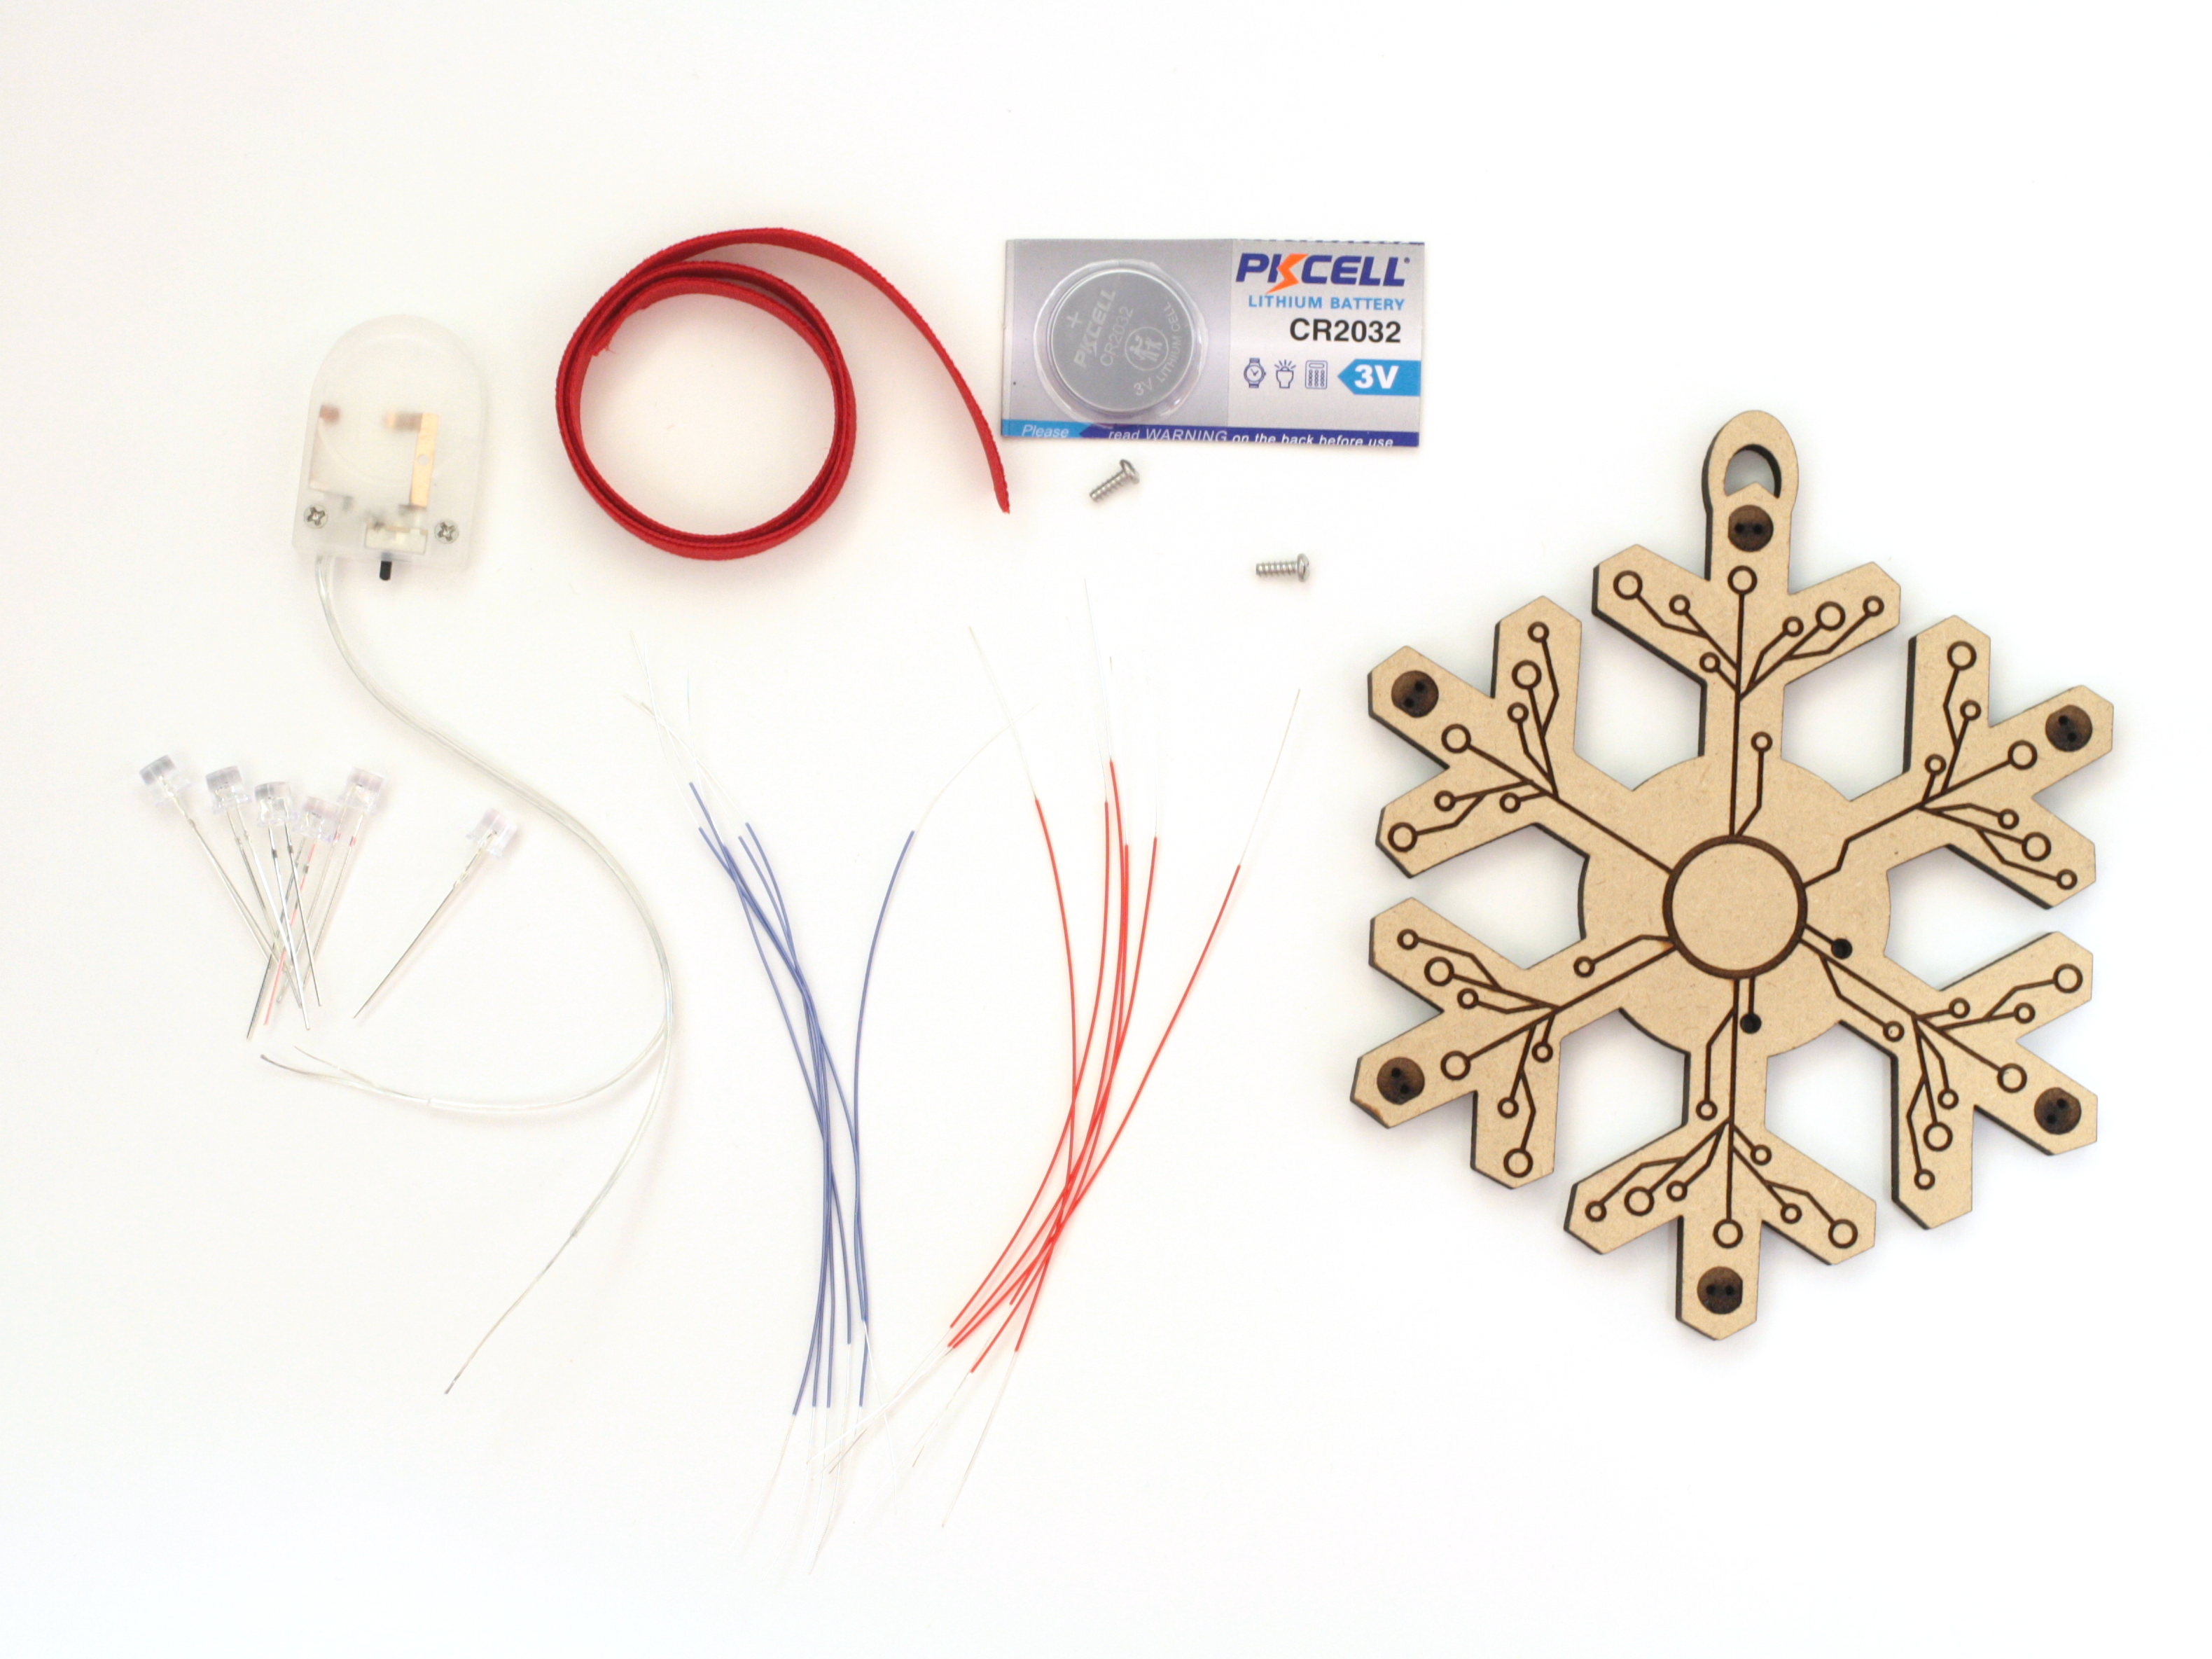 Circuit Snowflake Ornament Kit